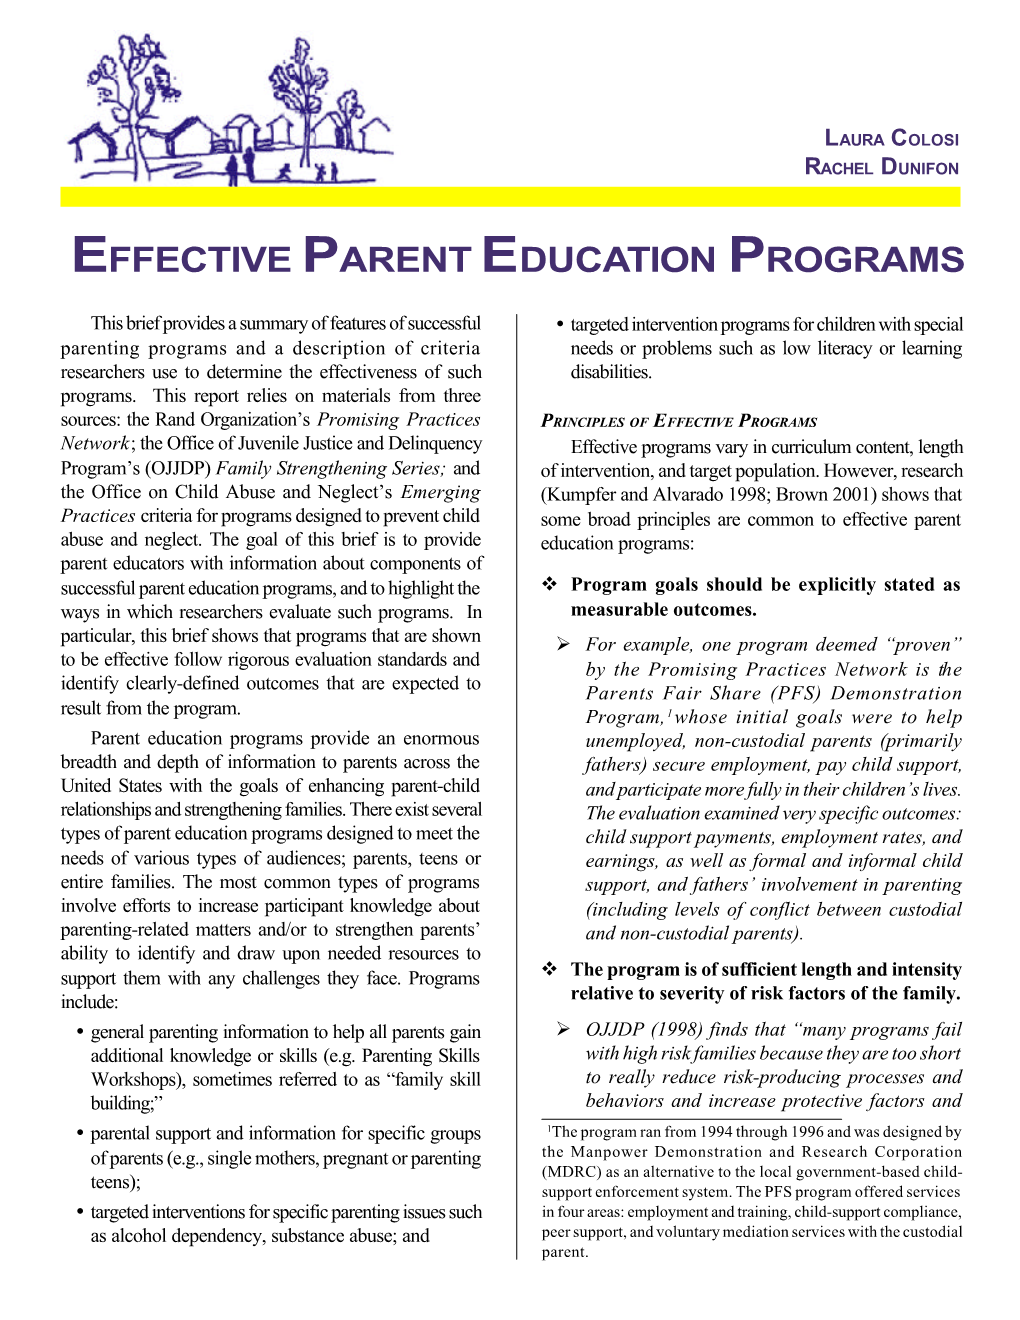 Effective Parenting Education Programs